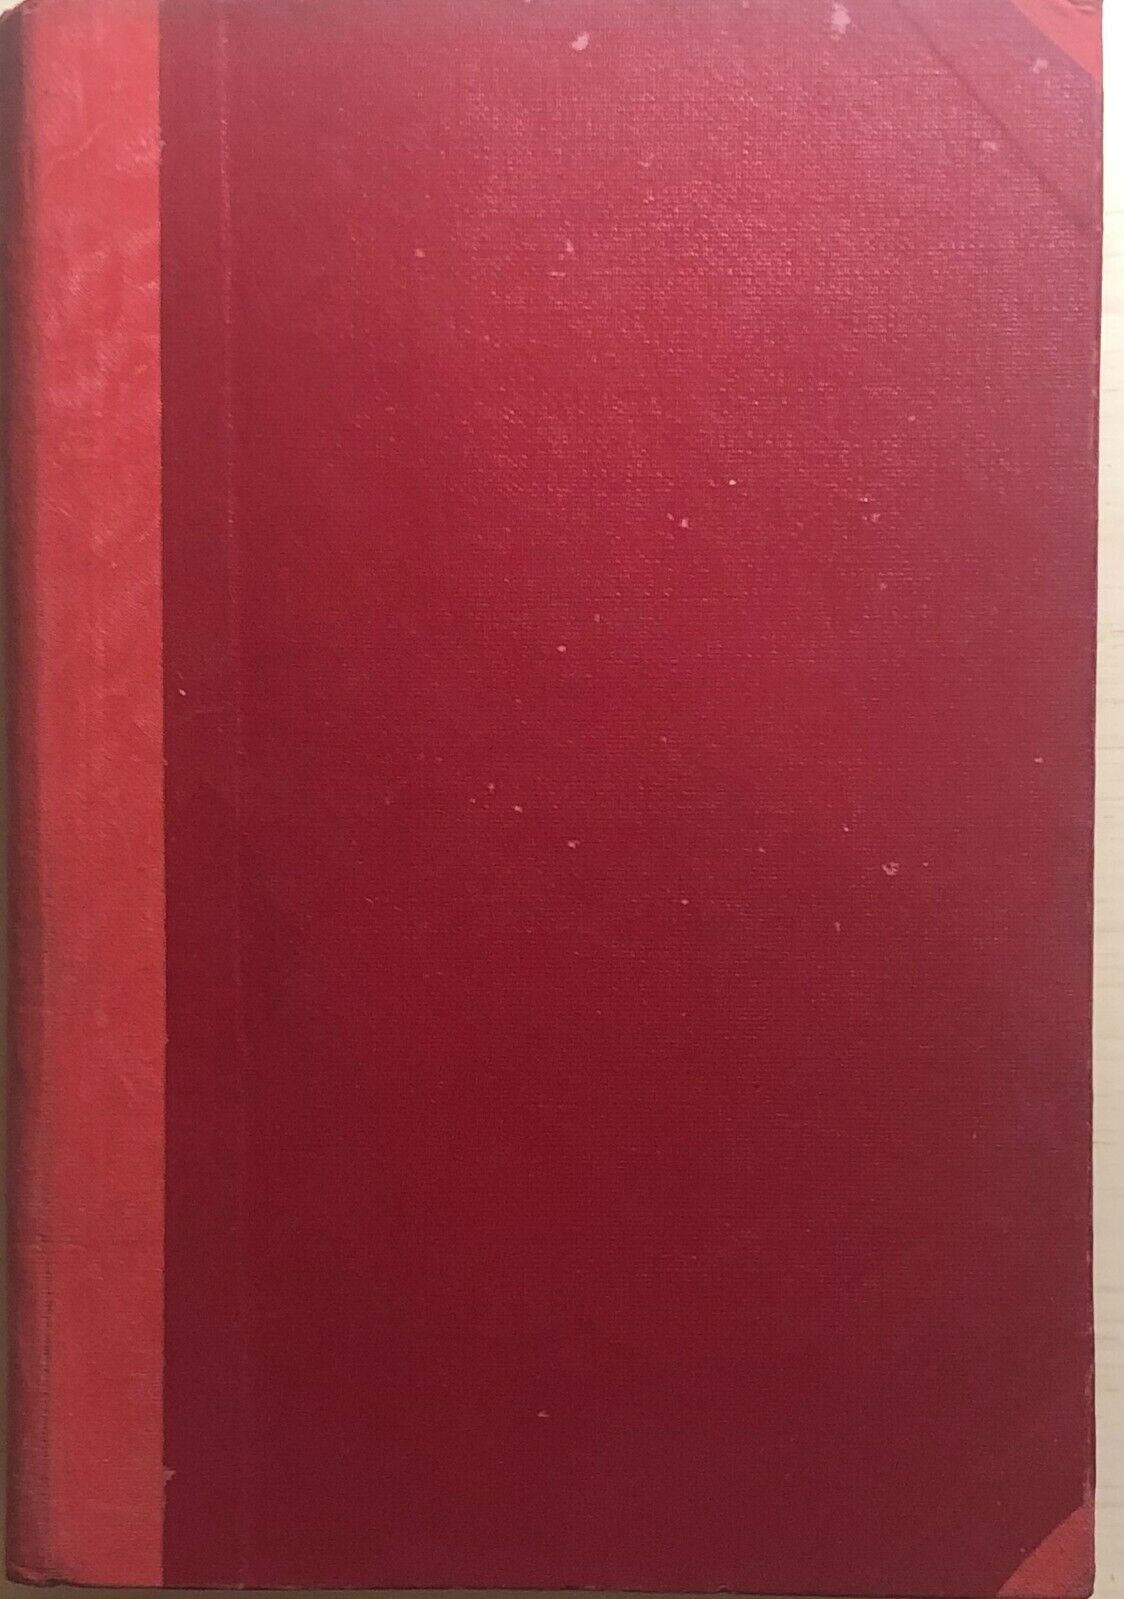 La civilt? medievale e moderna di Pochettino-Olmo, 1930, Societ? Editrice Intern